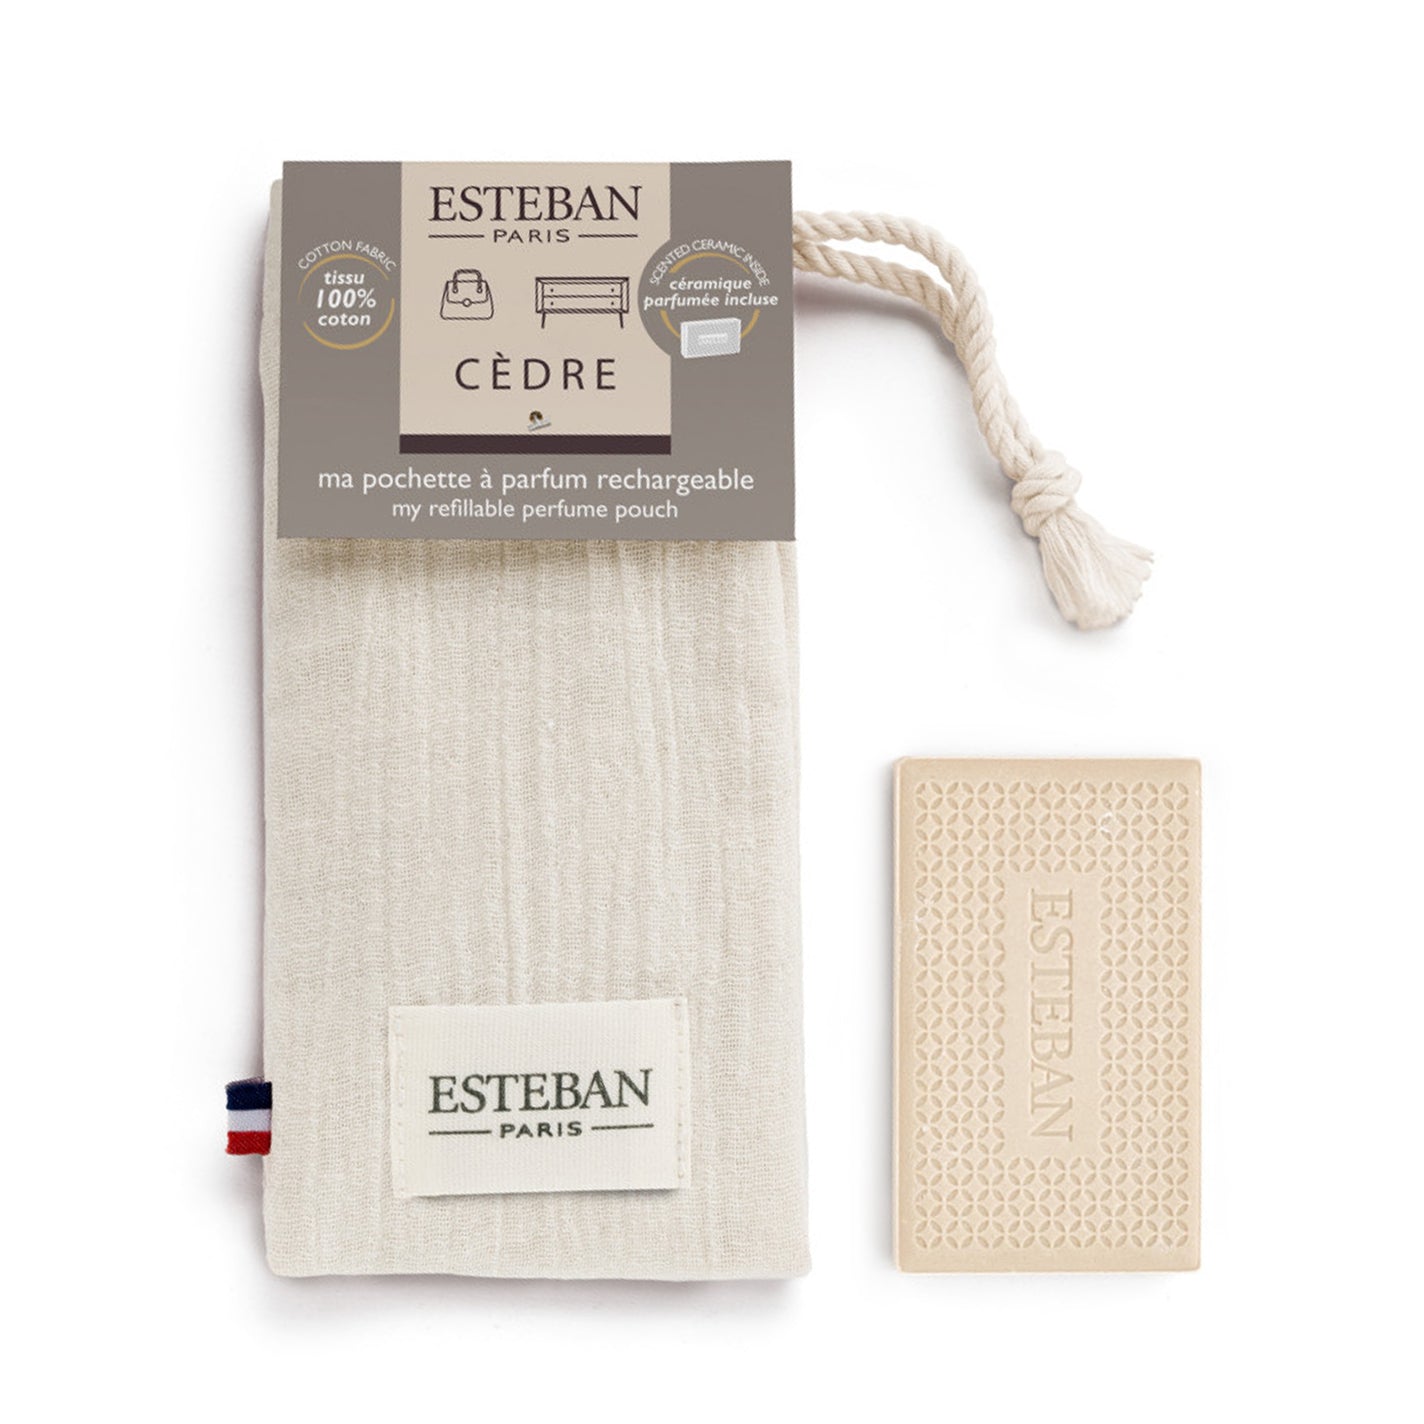 Esteban Cèdre Perfumed Ceramic Tile in Linen Pouch: Official Stockist